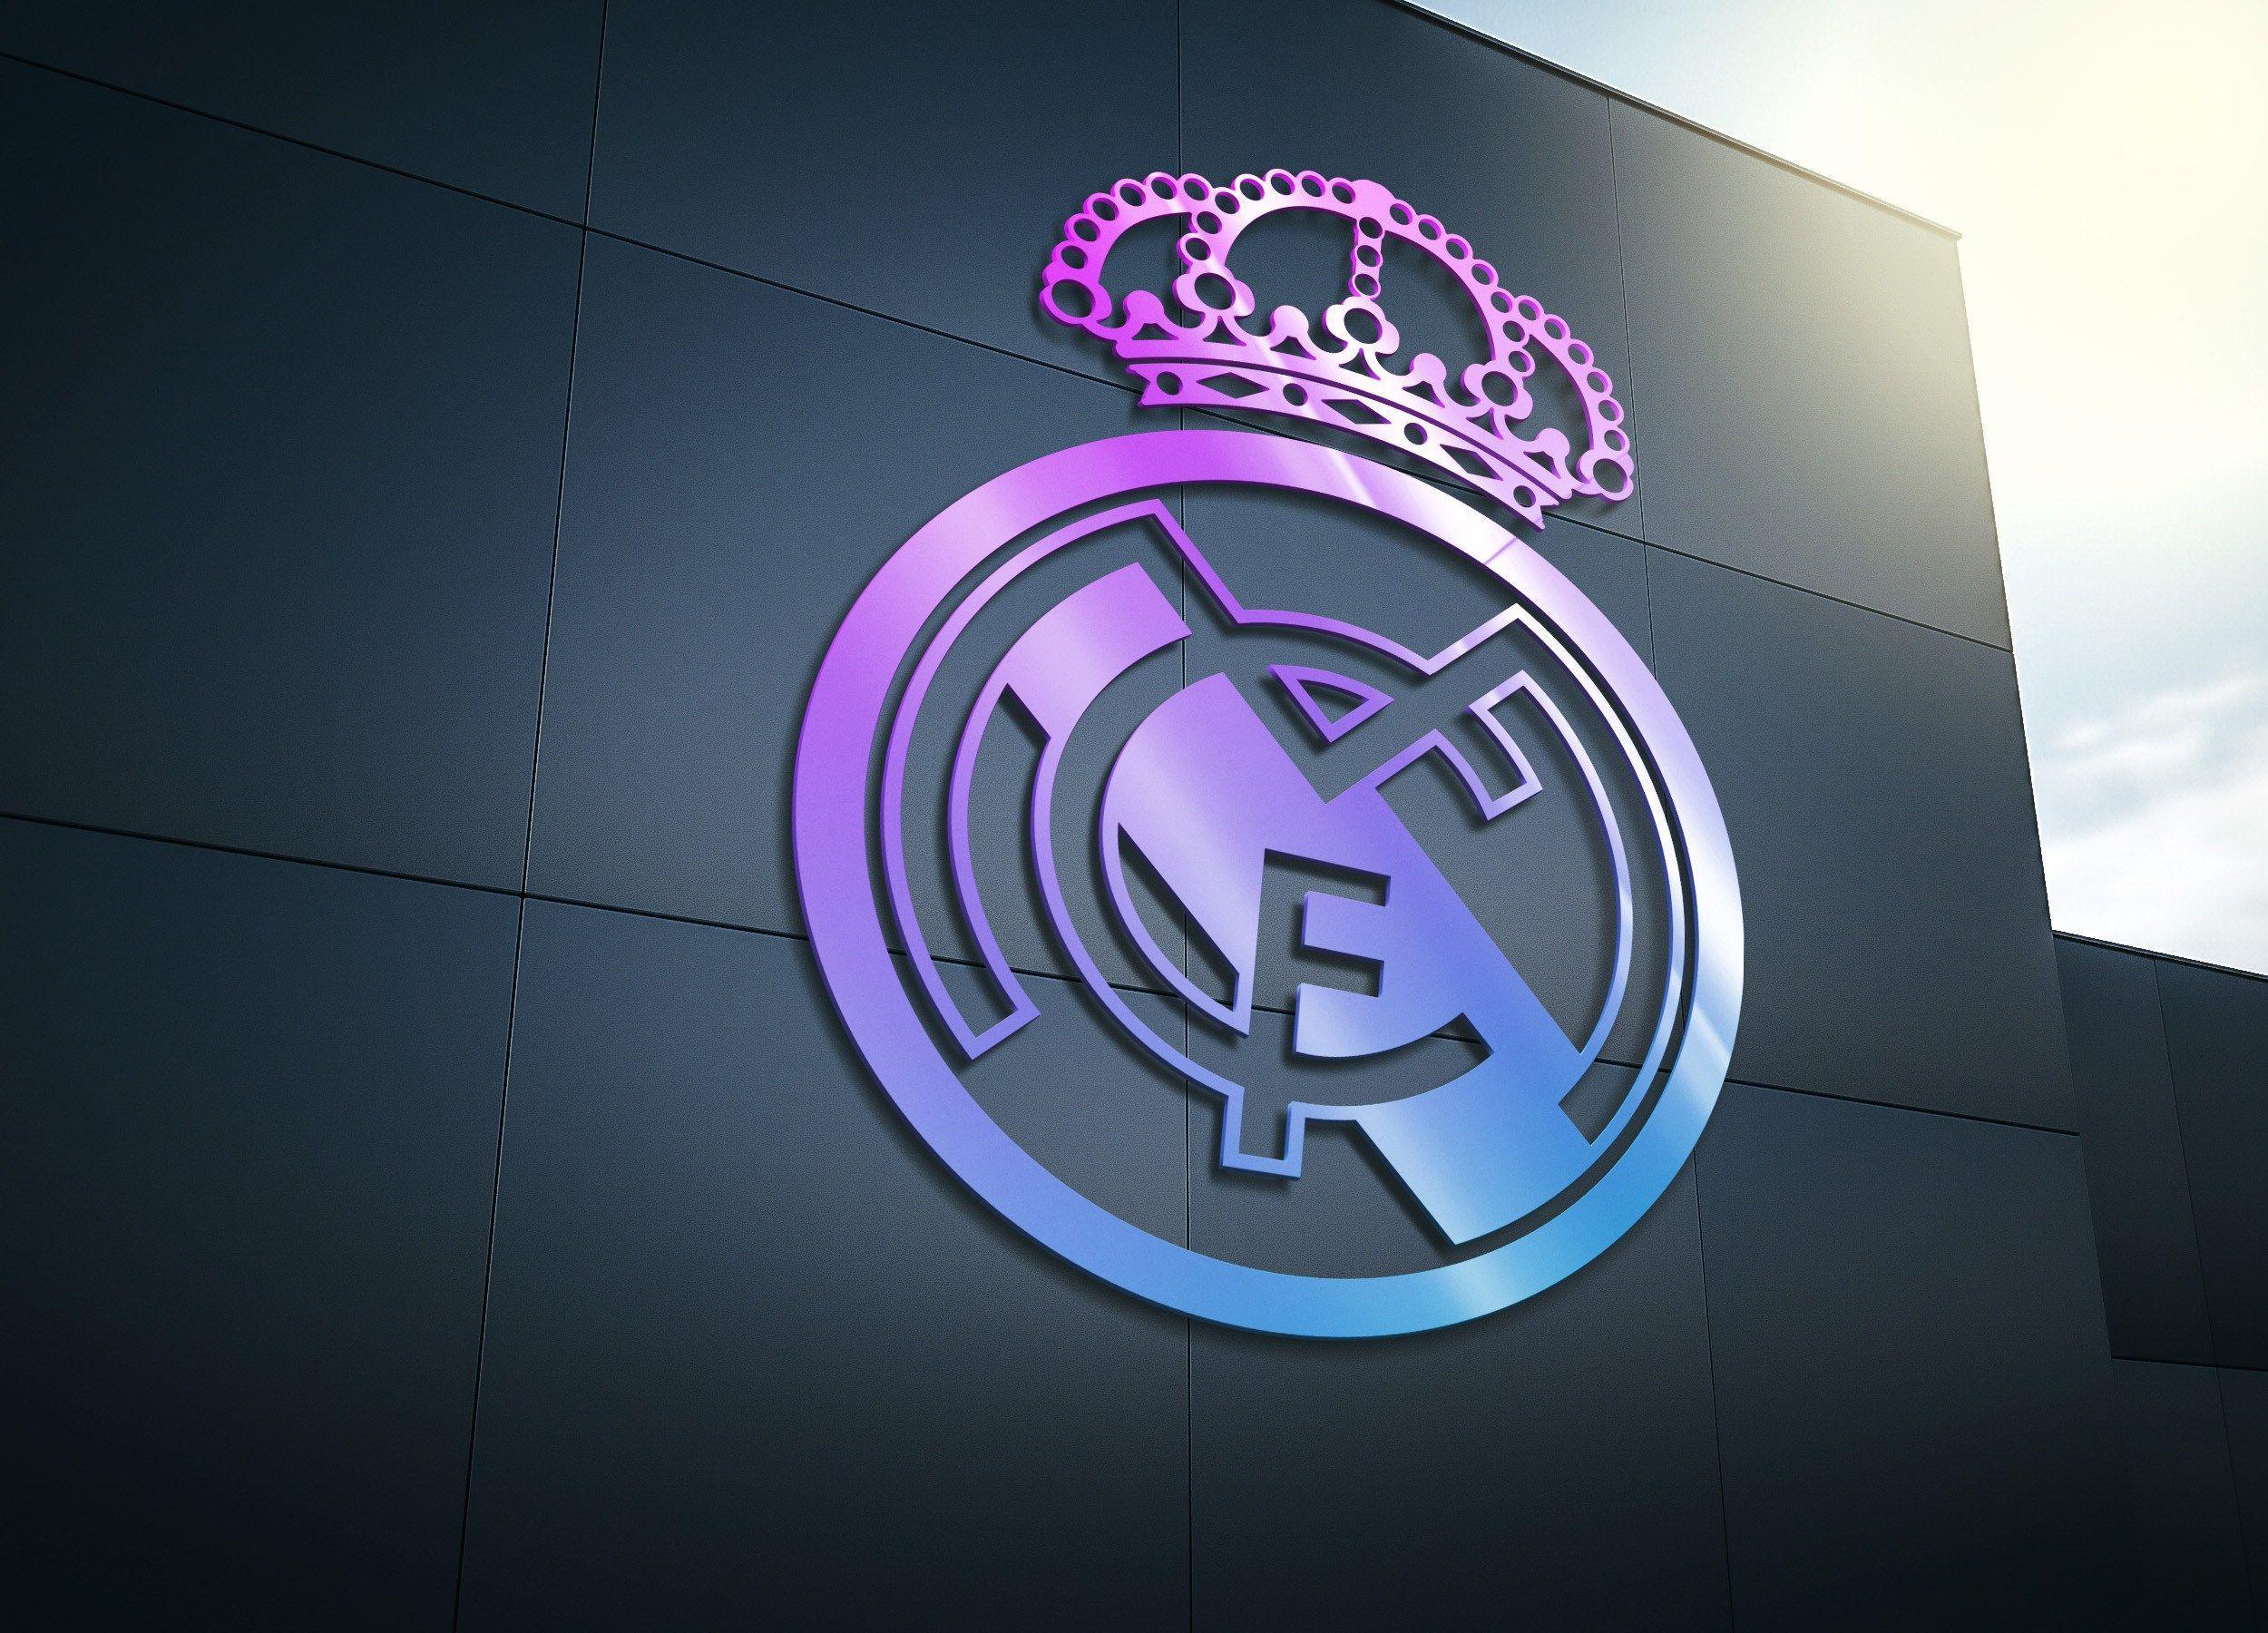 Real Madrid Galaxy